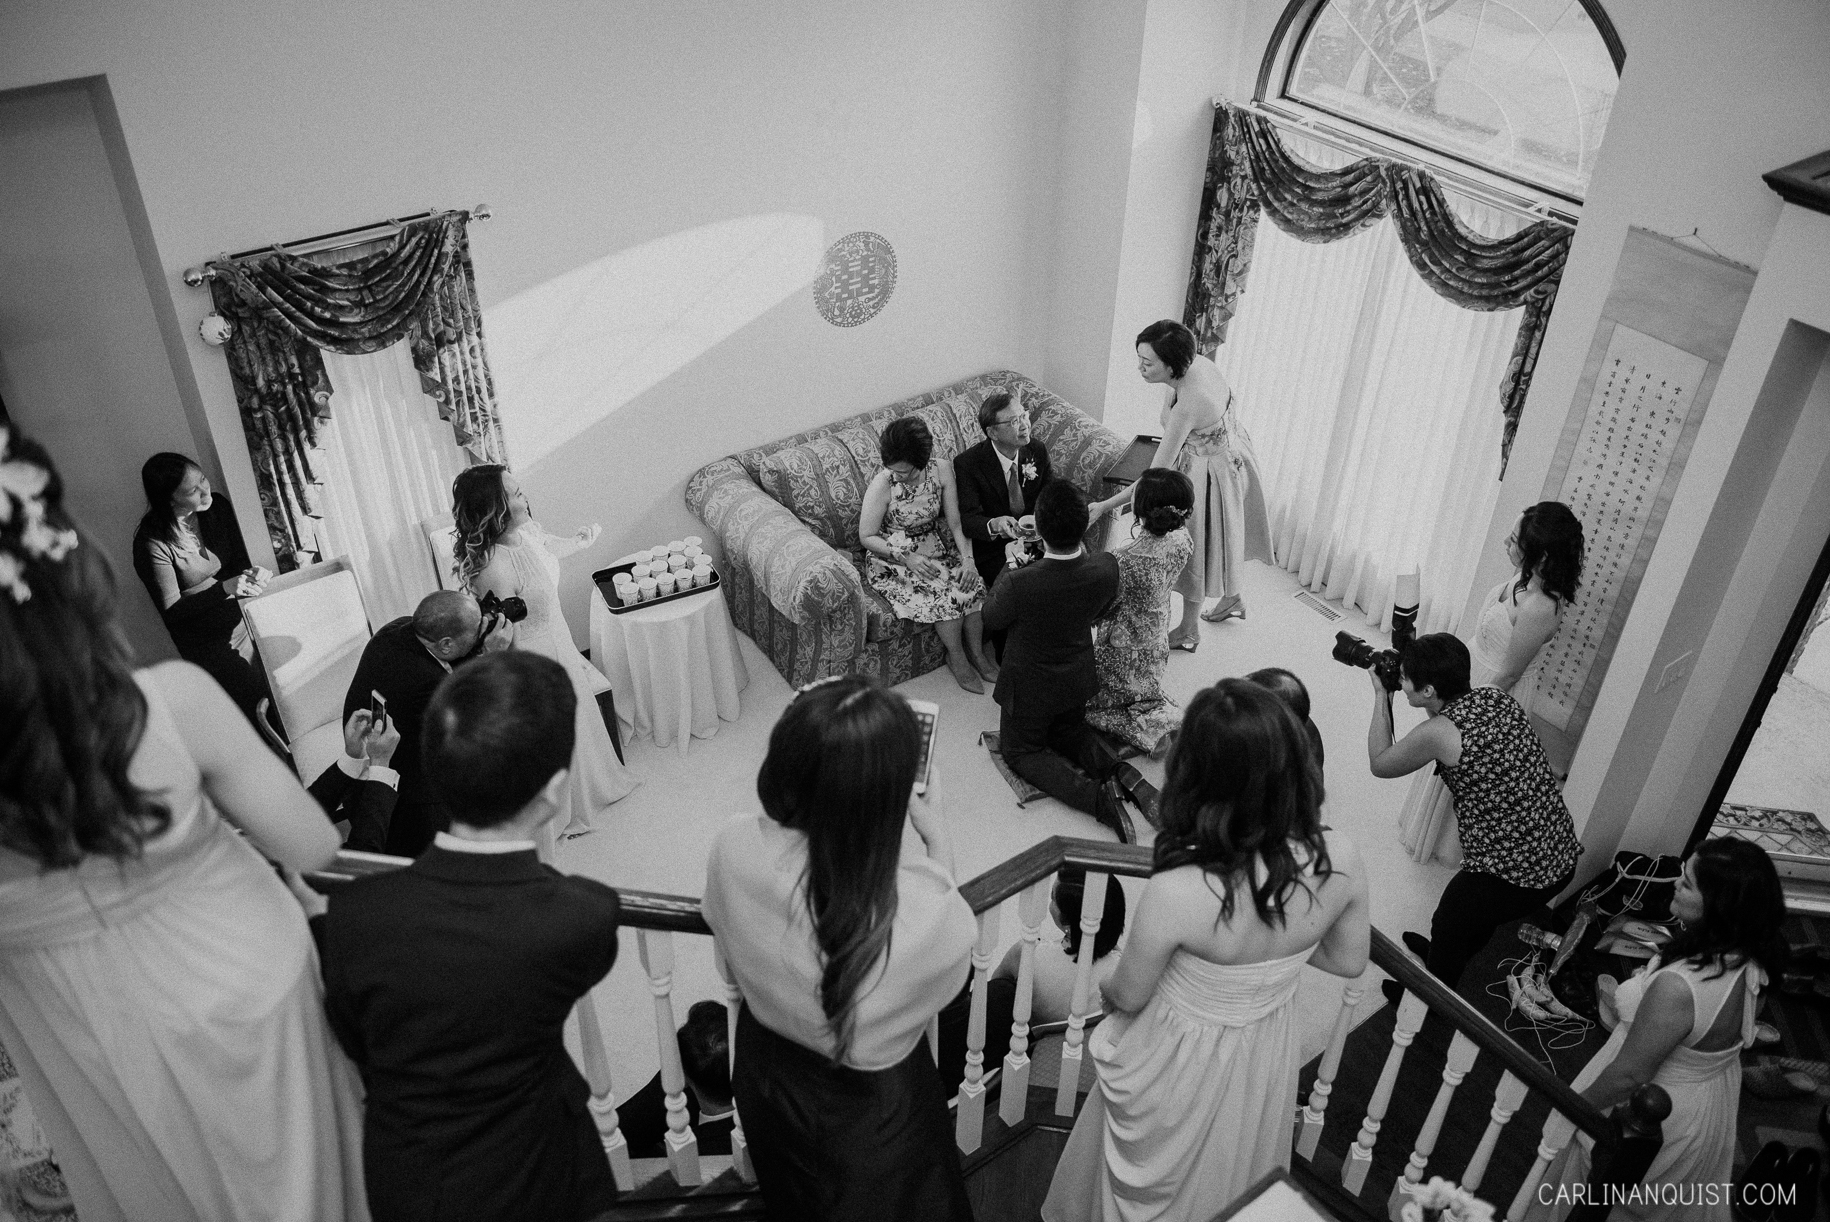 Calgary Chinese Wedding Photos | Tea Ceremony